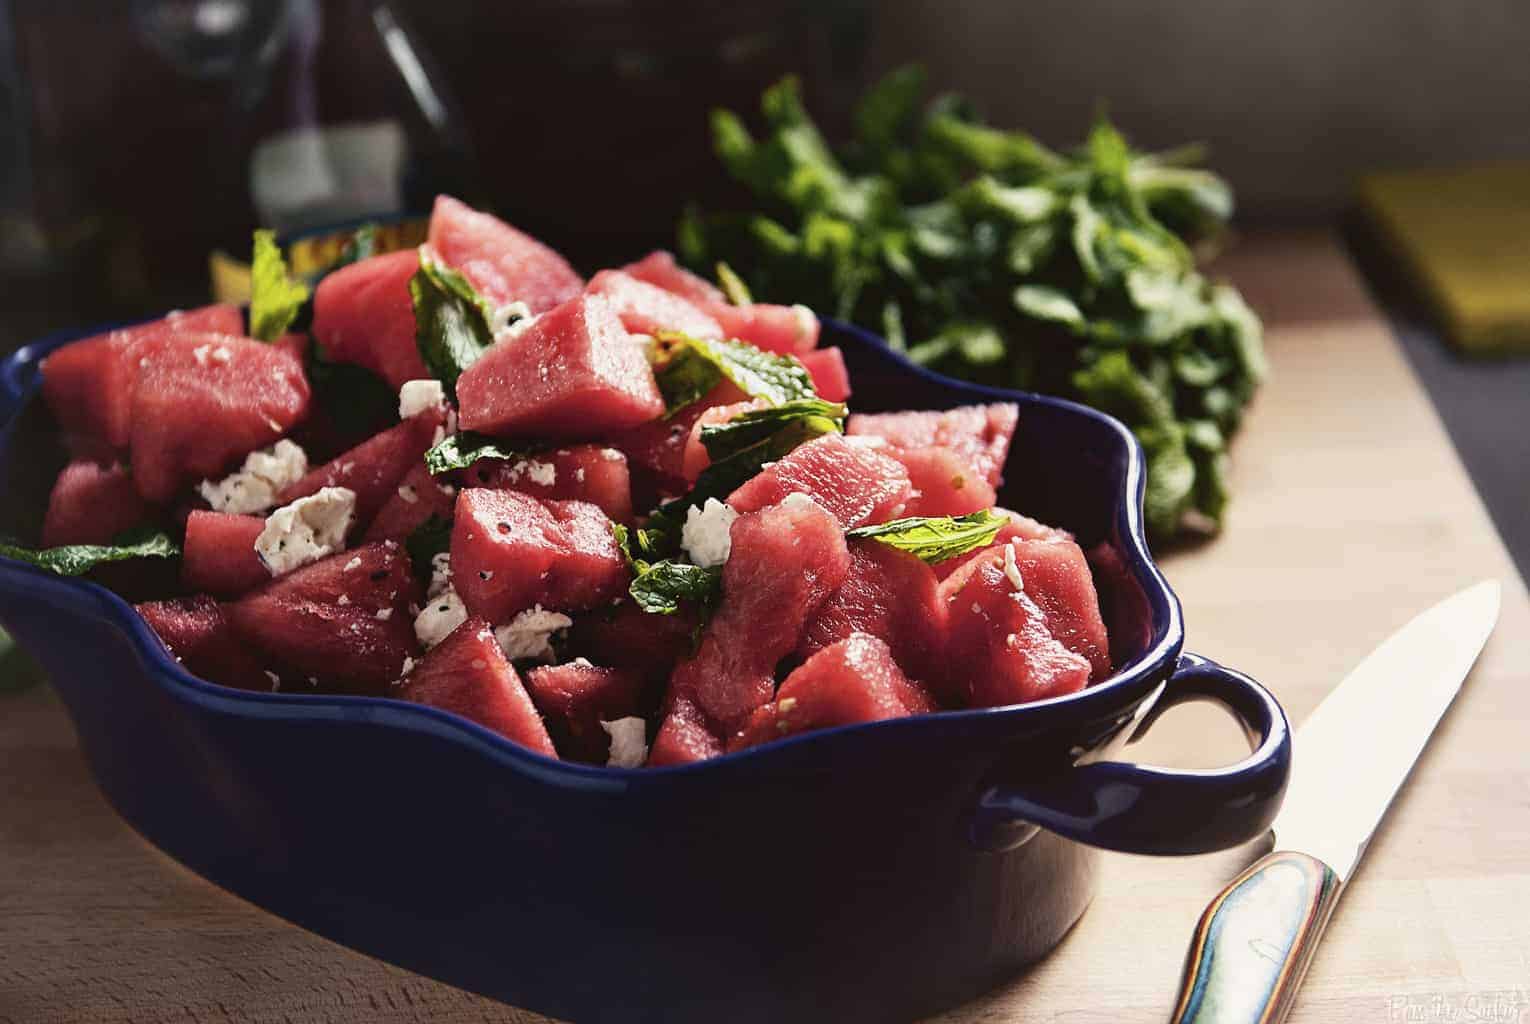 Watermelon Salad with a Balsamic Reduction | Kita Roberts PassTheSushi.com